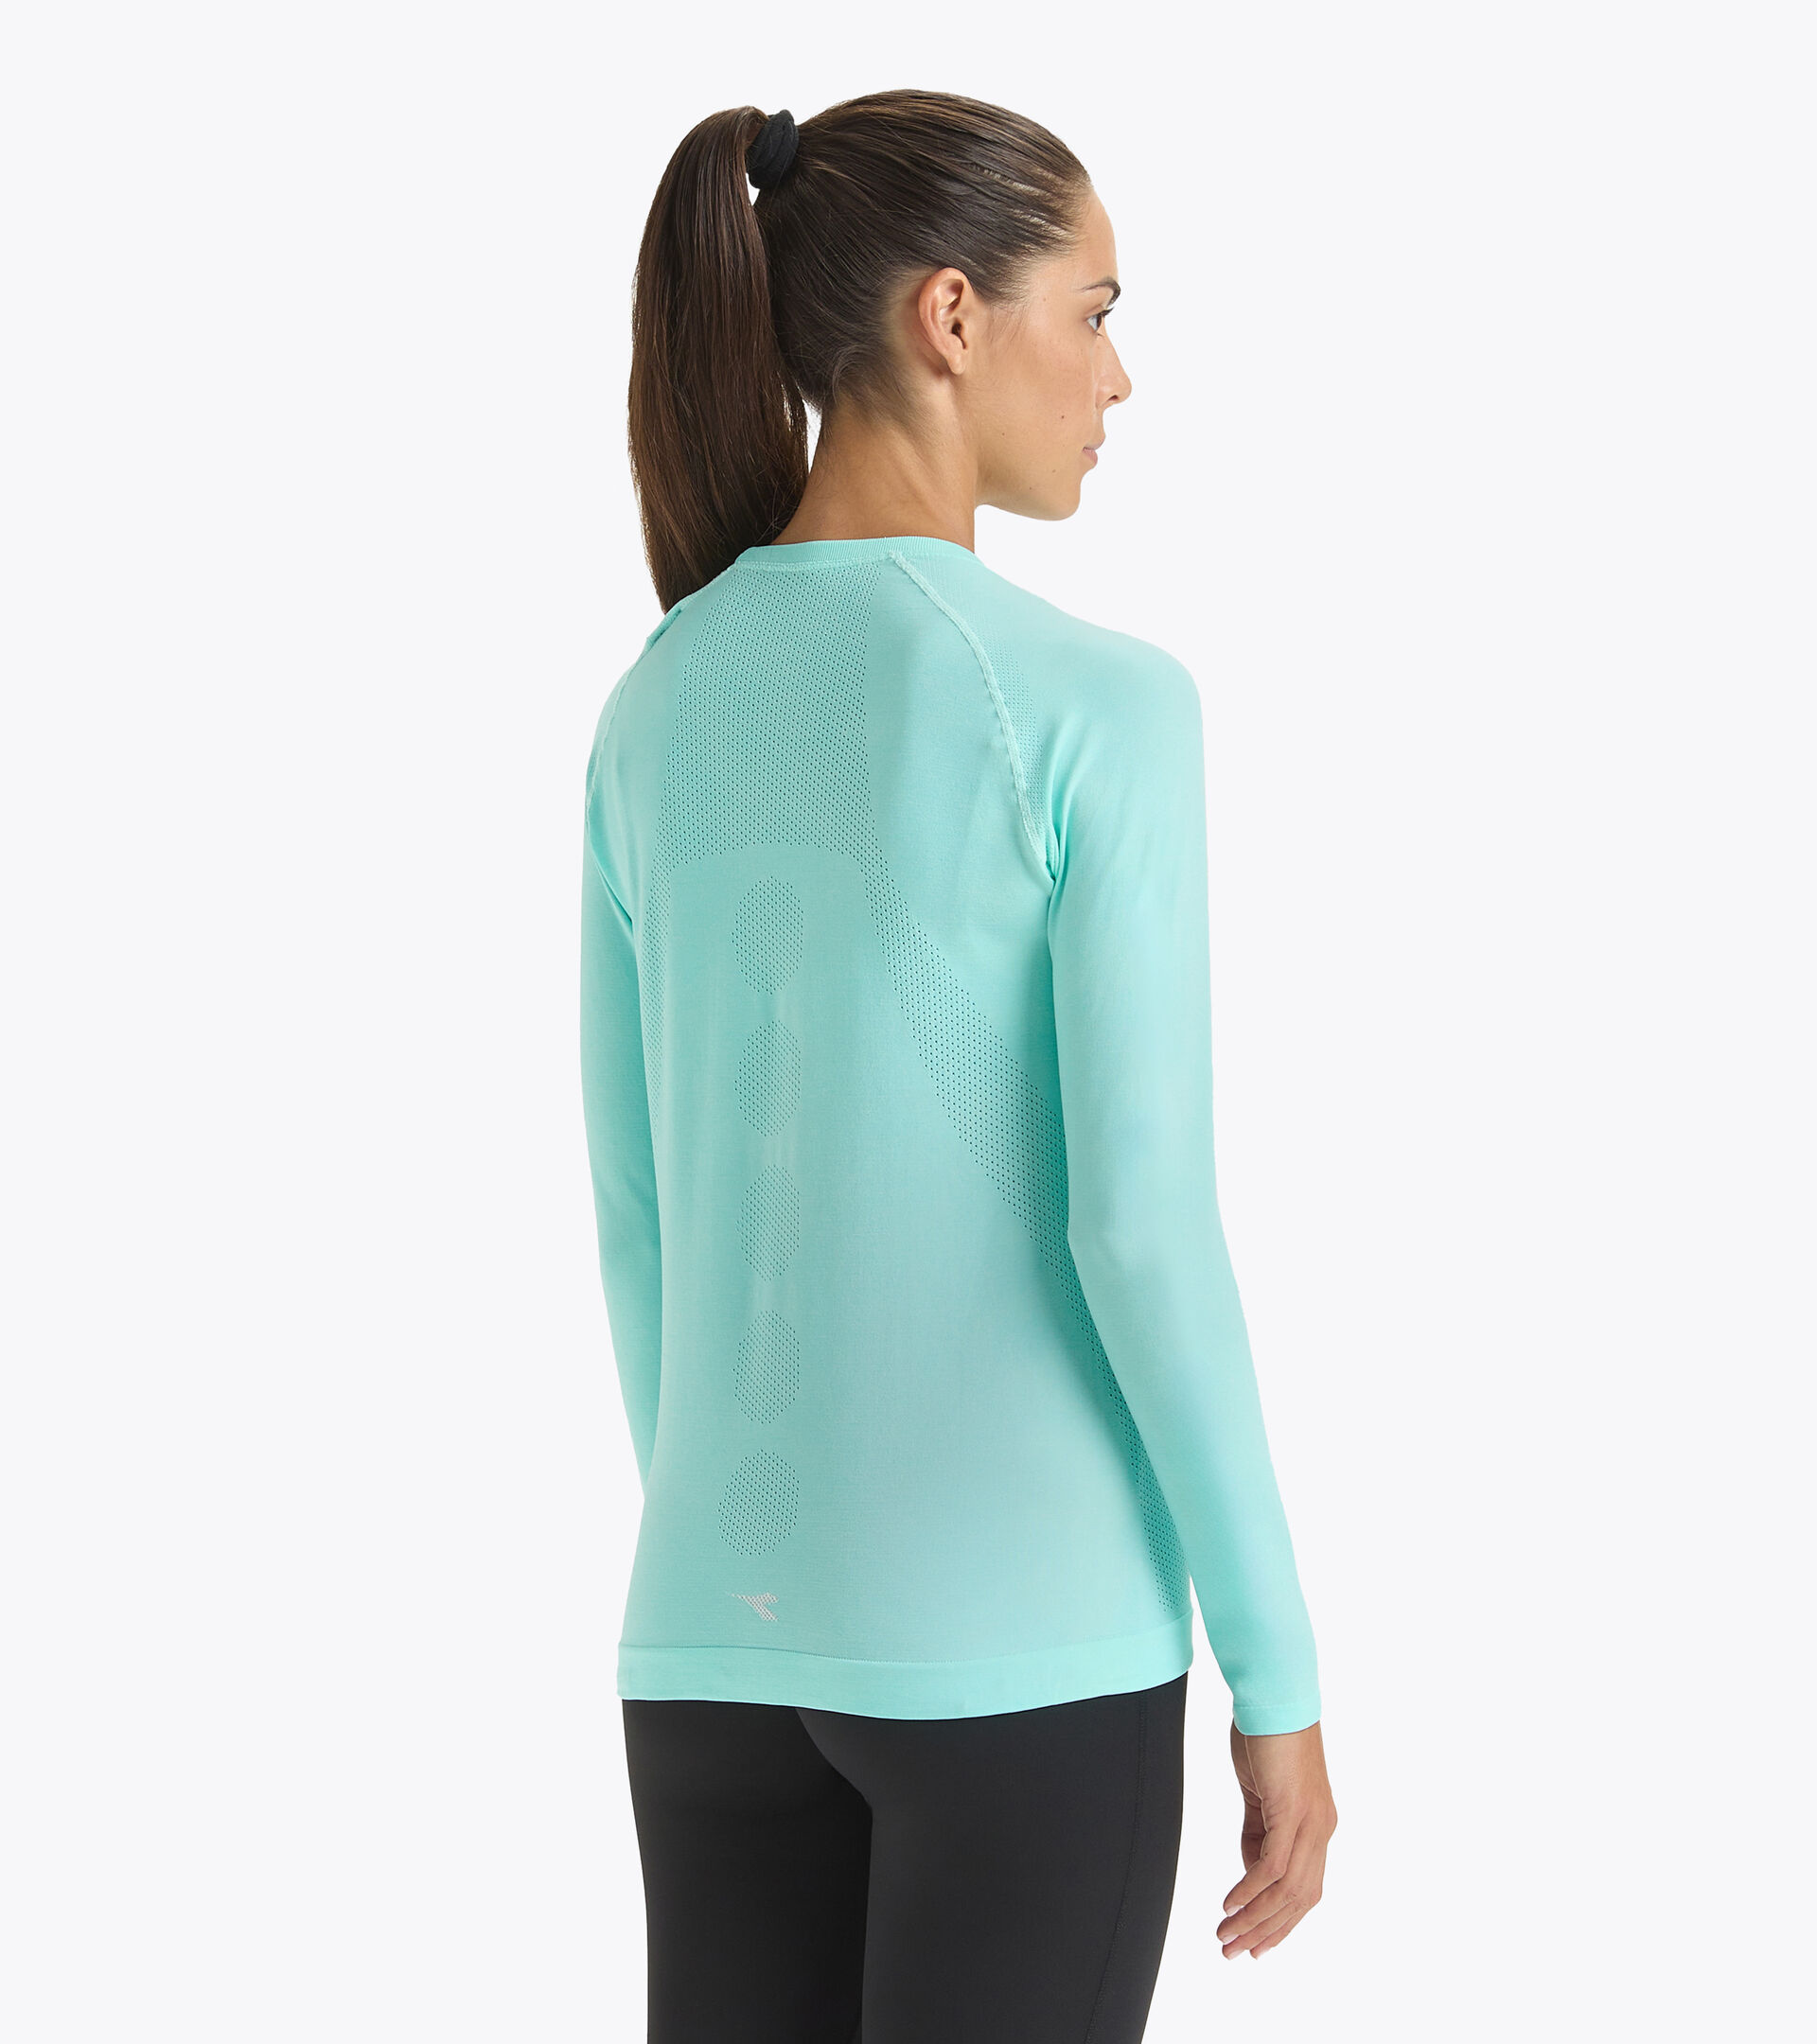 L. LS T-SHIRT SKIN FRIENDLY Long-sleeved thermal shirt - Women - Diadora  Online Store